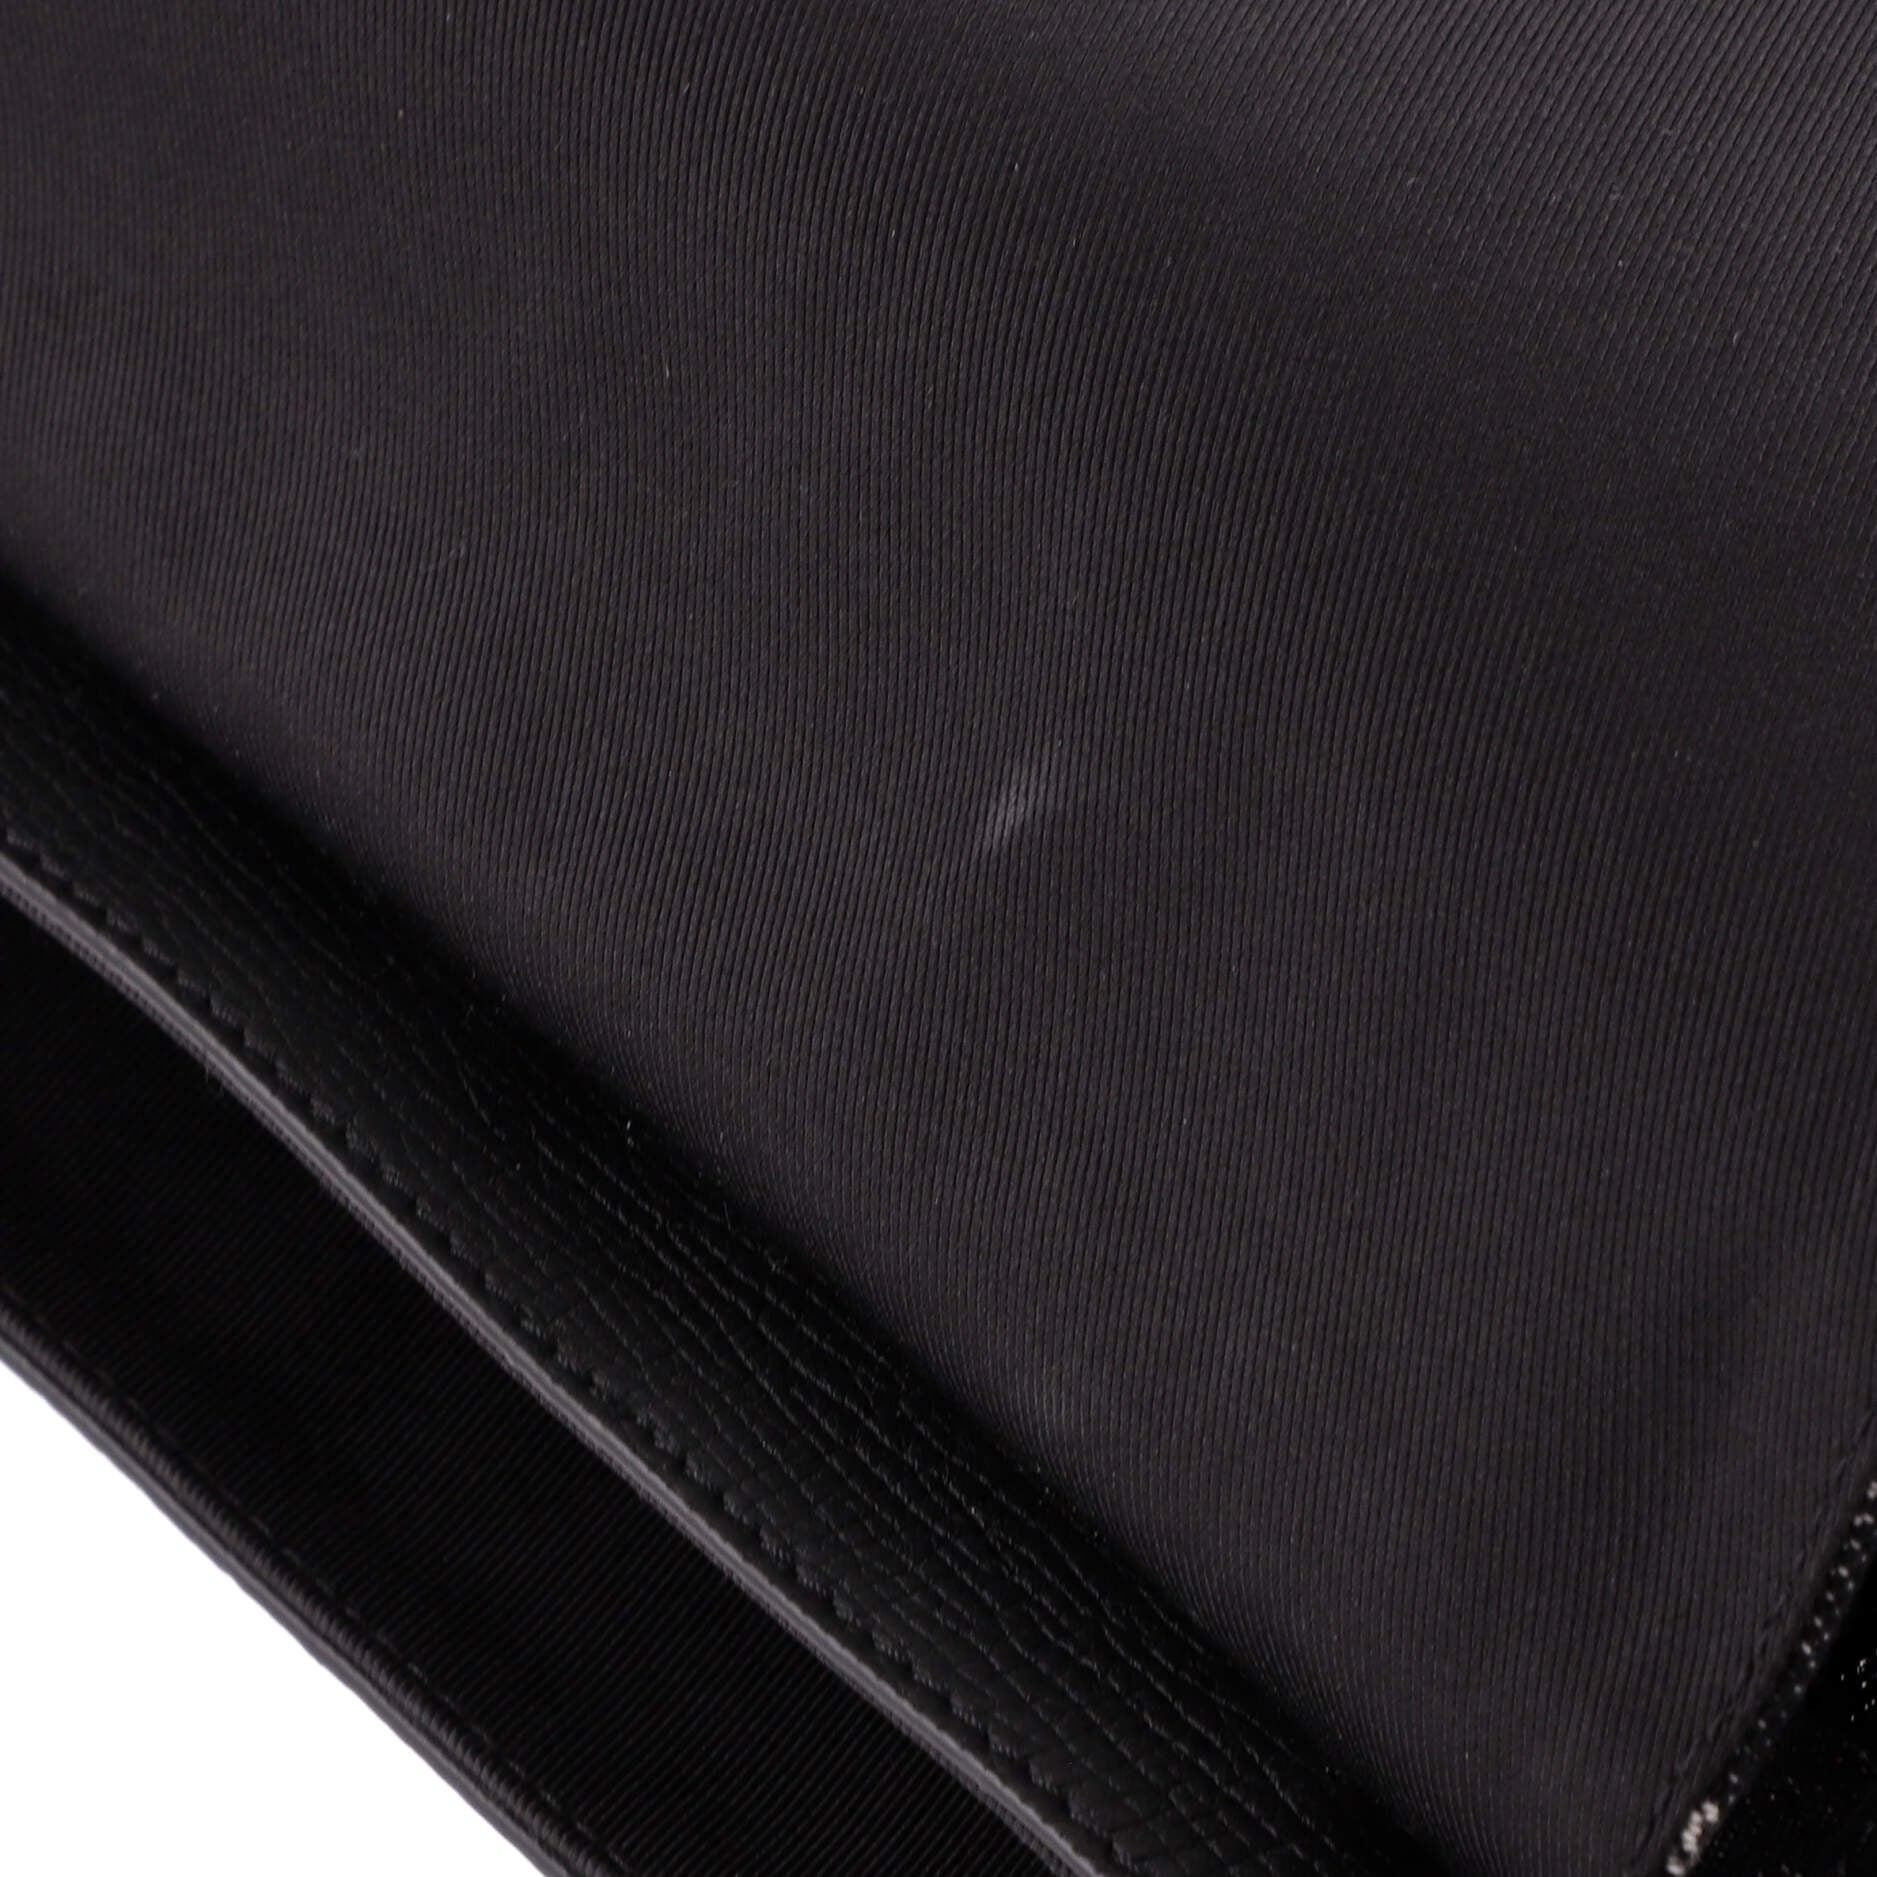 Louis Vuitton x Nigo Besace Tokyo Monogram Black